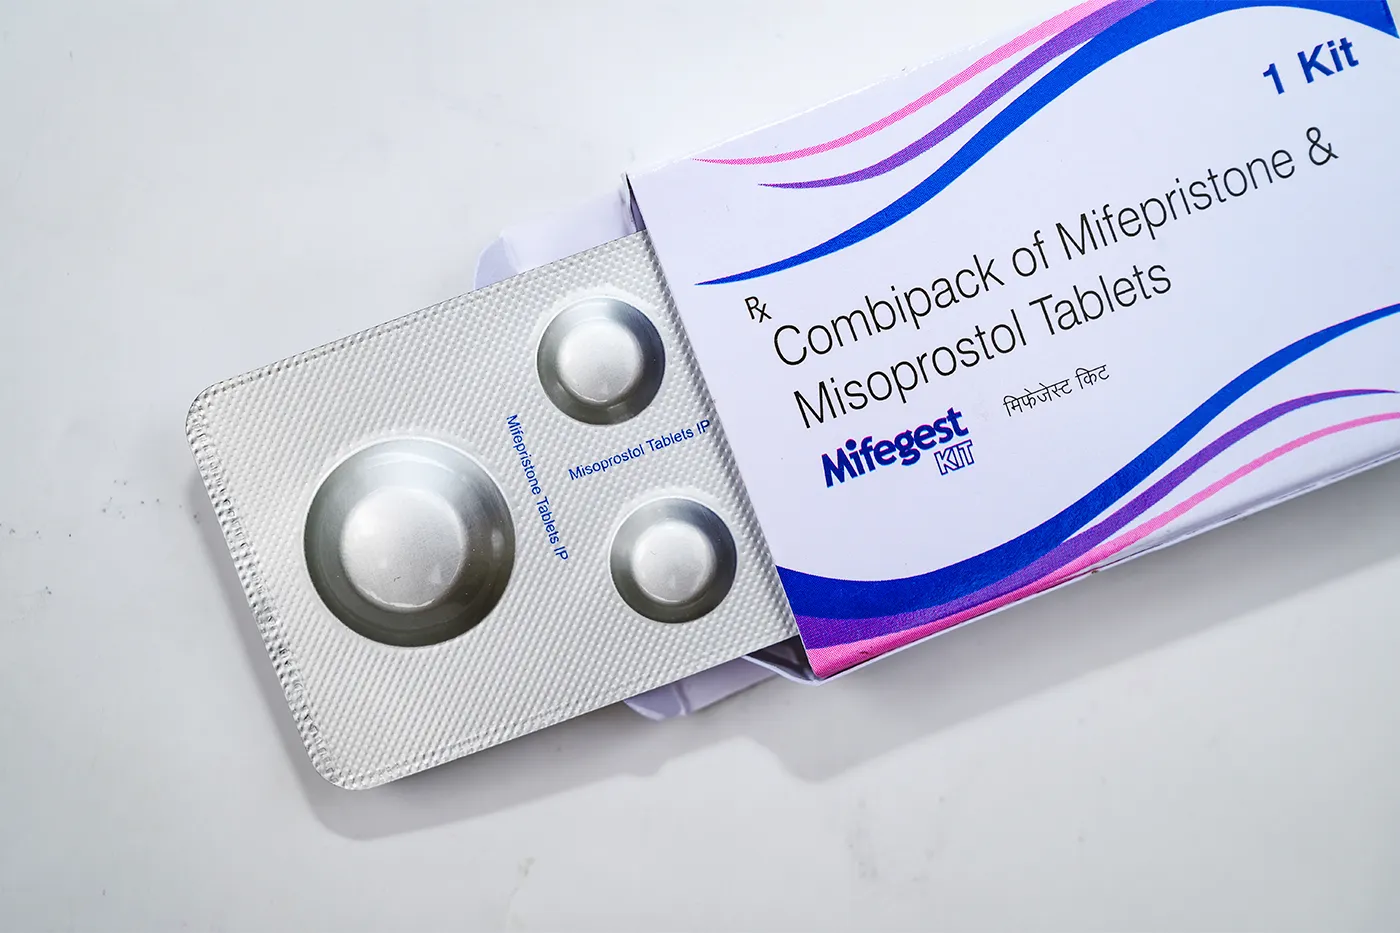 Abortion pill kit